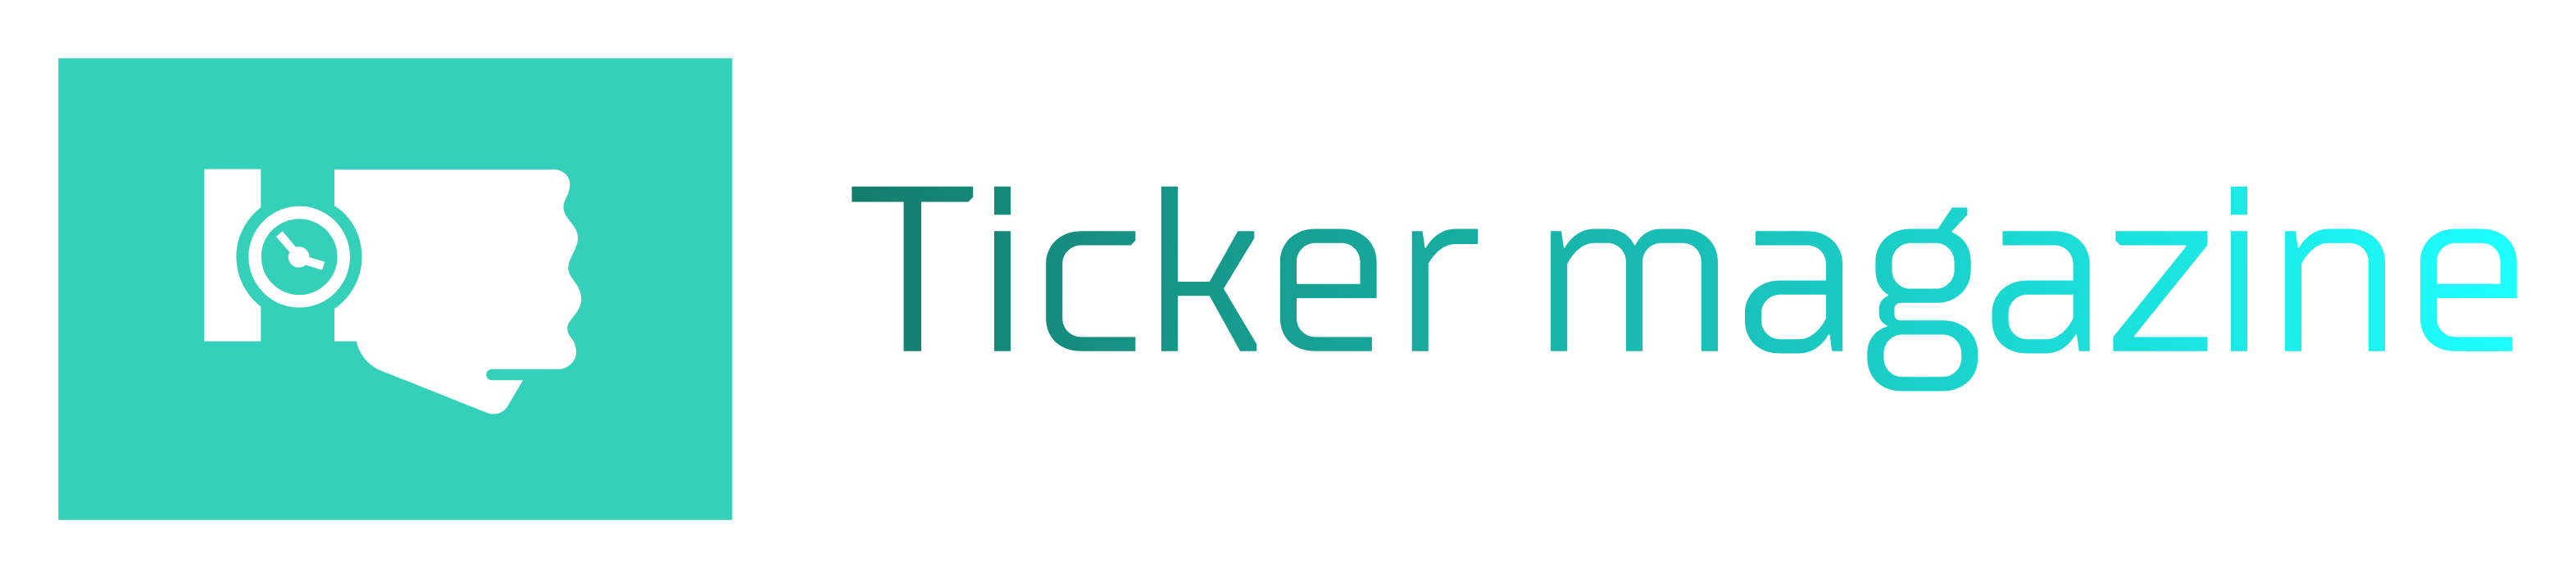 ticker-magazine.com